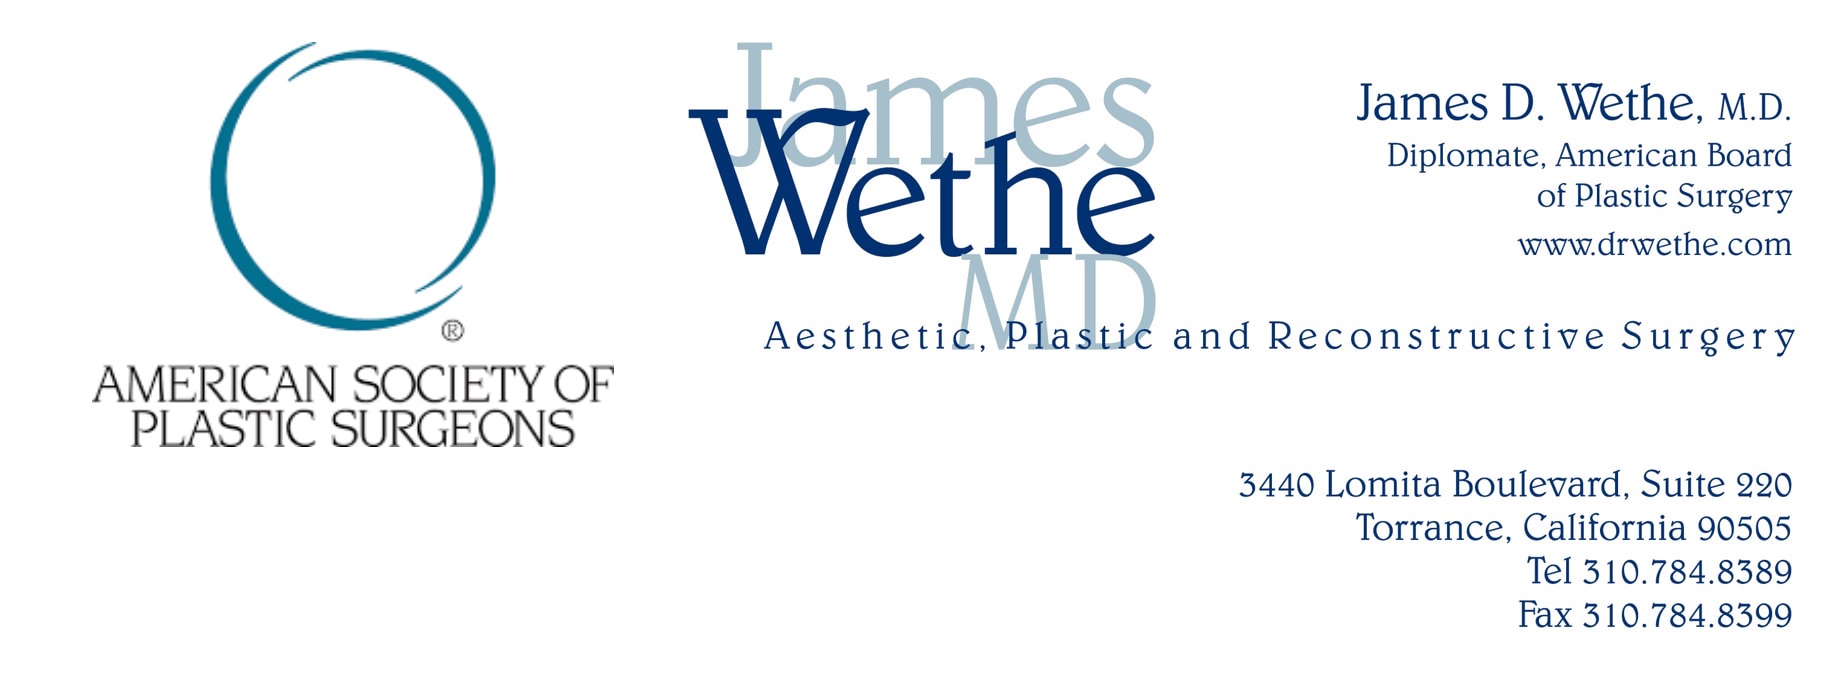 Letterhead James D Wethe, MD.  American Society of Plastic Surgeons Logo.  Diplomate American Board of Plastic Surgery.  www.drwethe.com.  3440 Lomita Bouleavard, Suite 220, Torrance, California 90505.  Tel 310-784-8389 Fax 310-784-8399